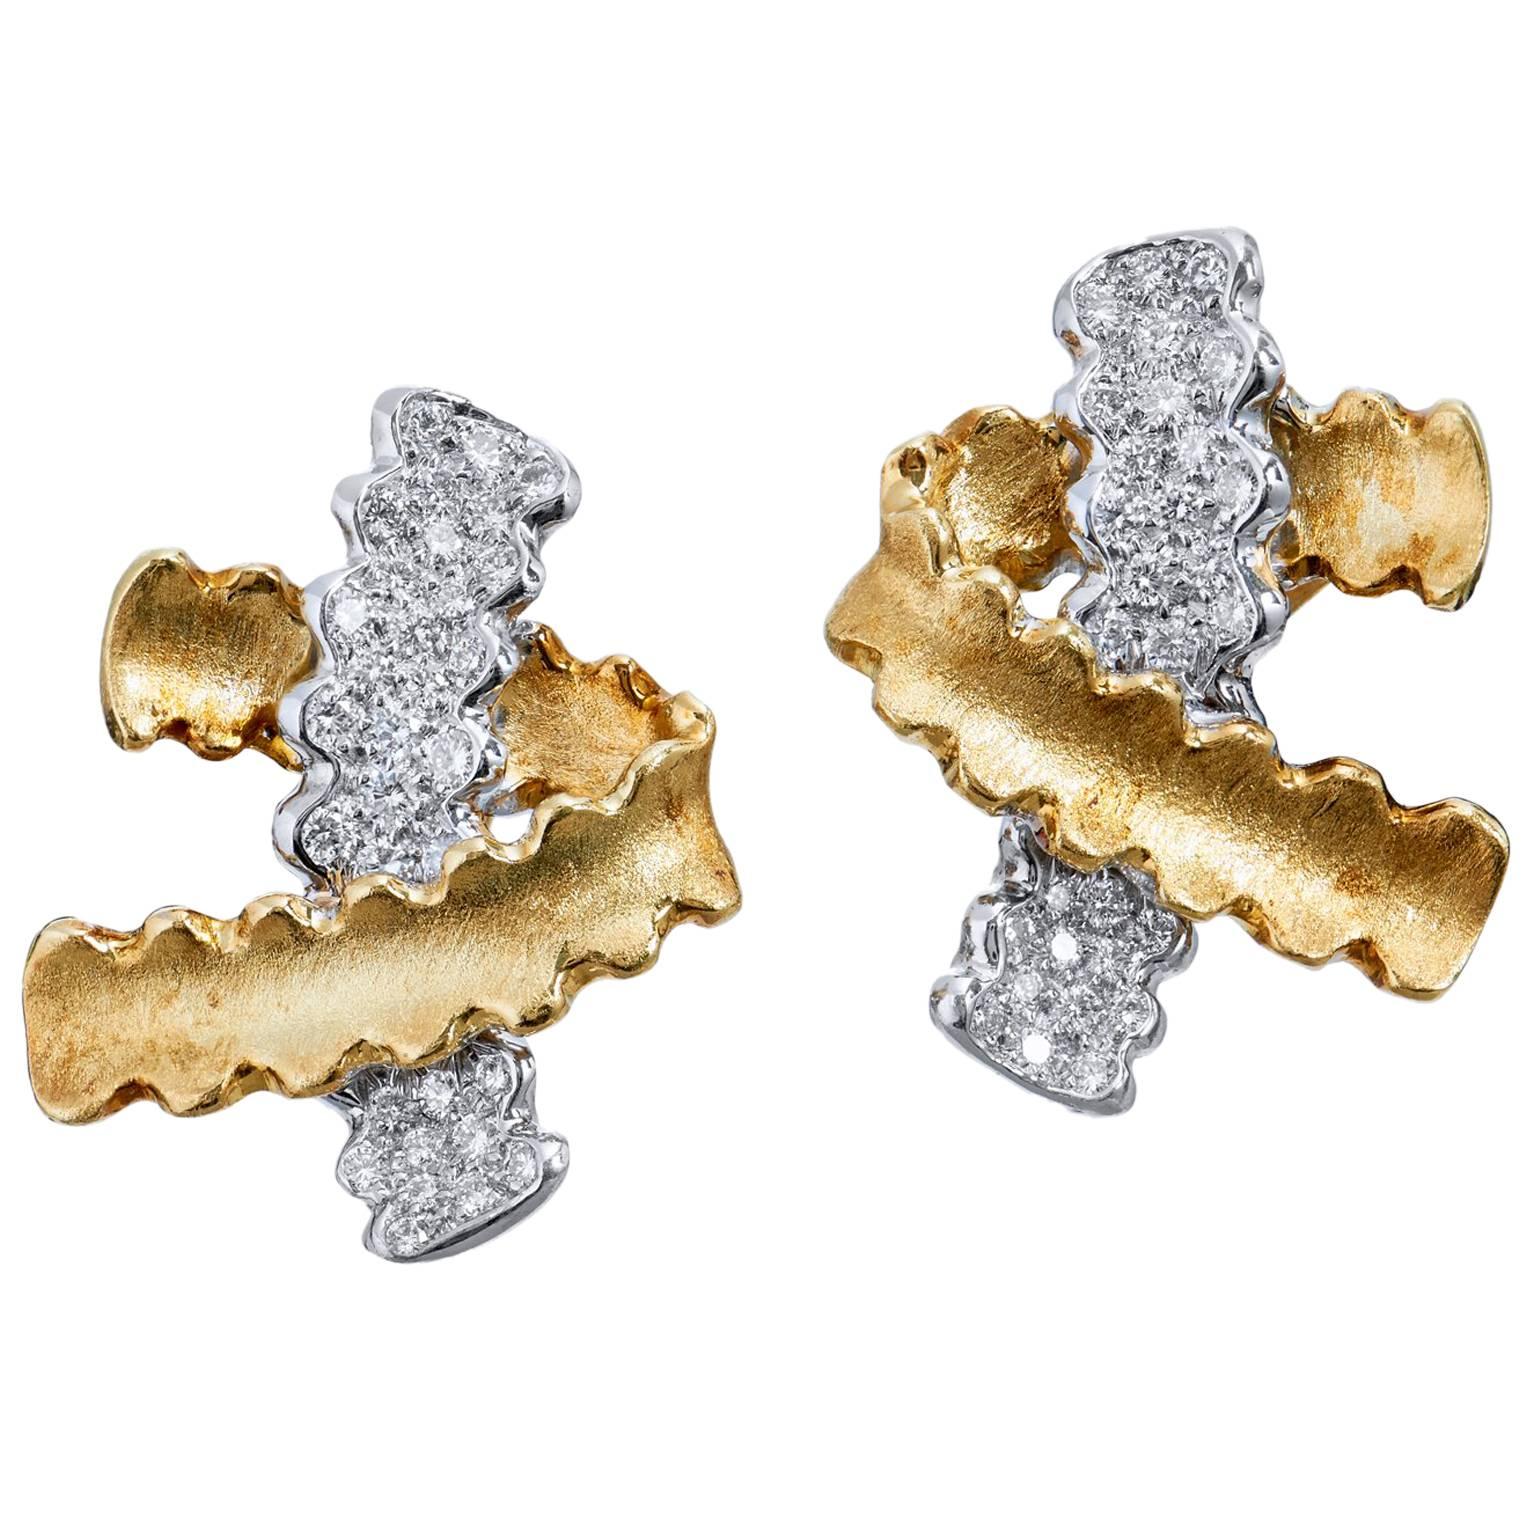 Nicholas Varney Gold Platinum Earrings